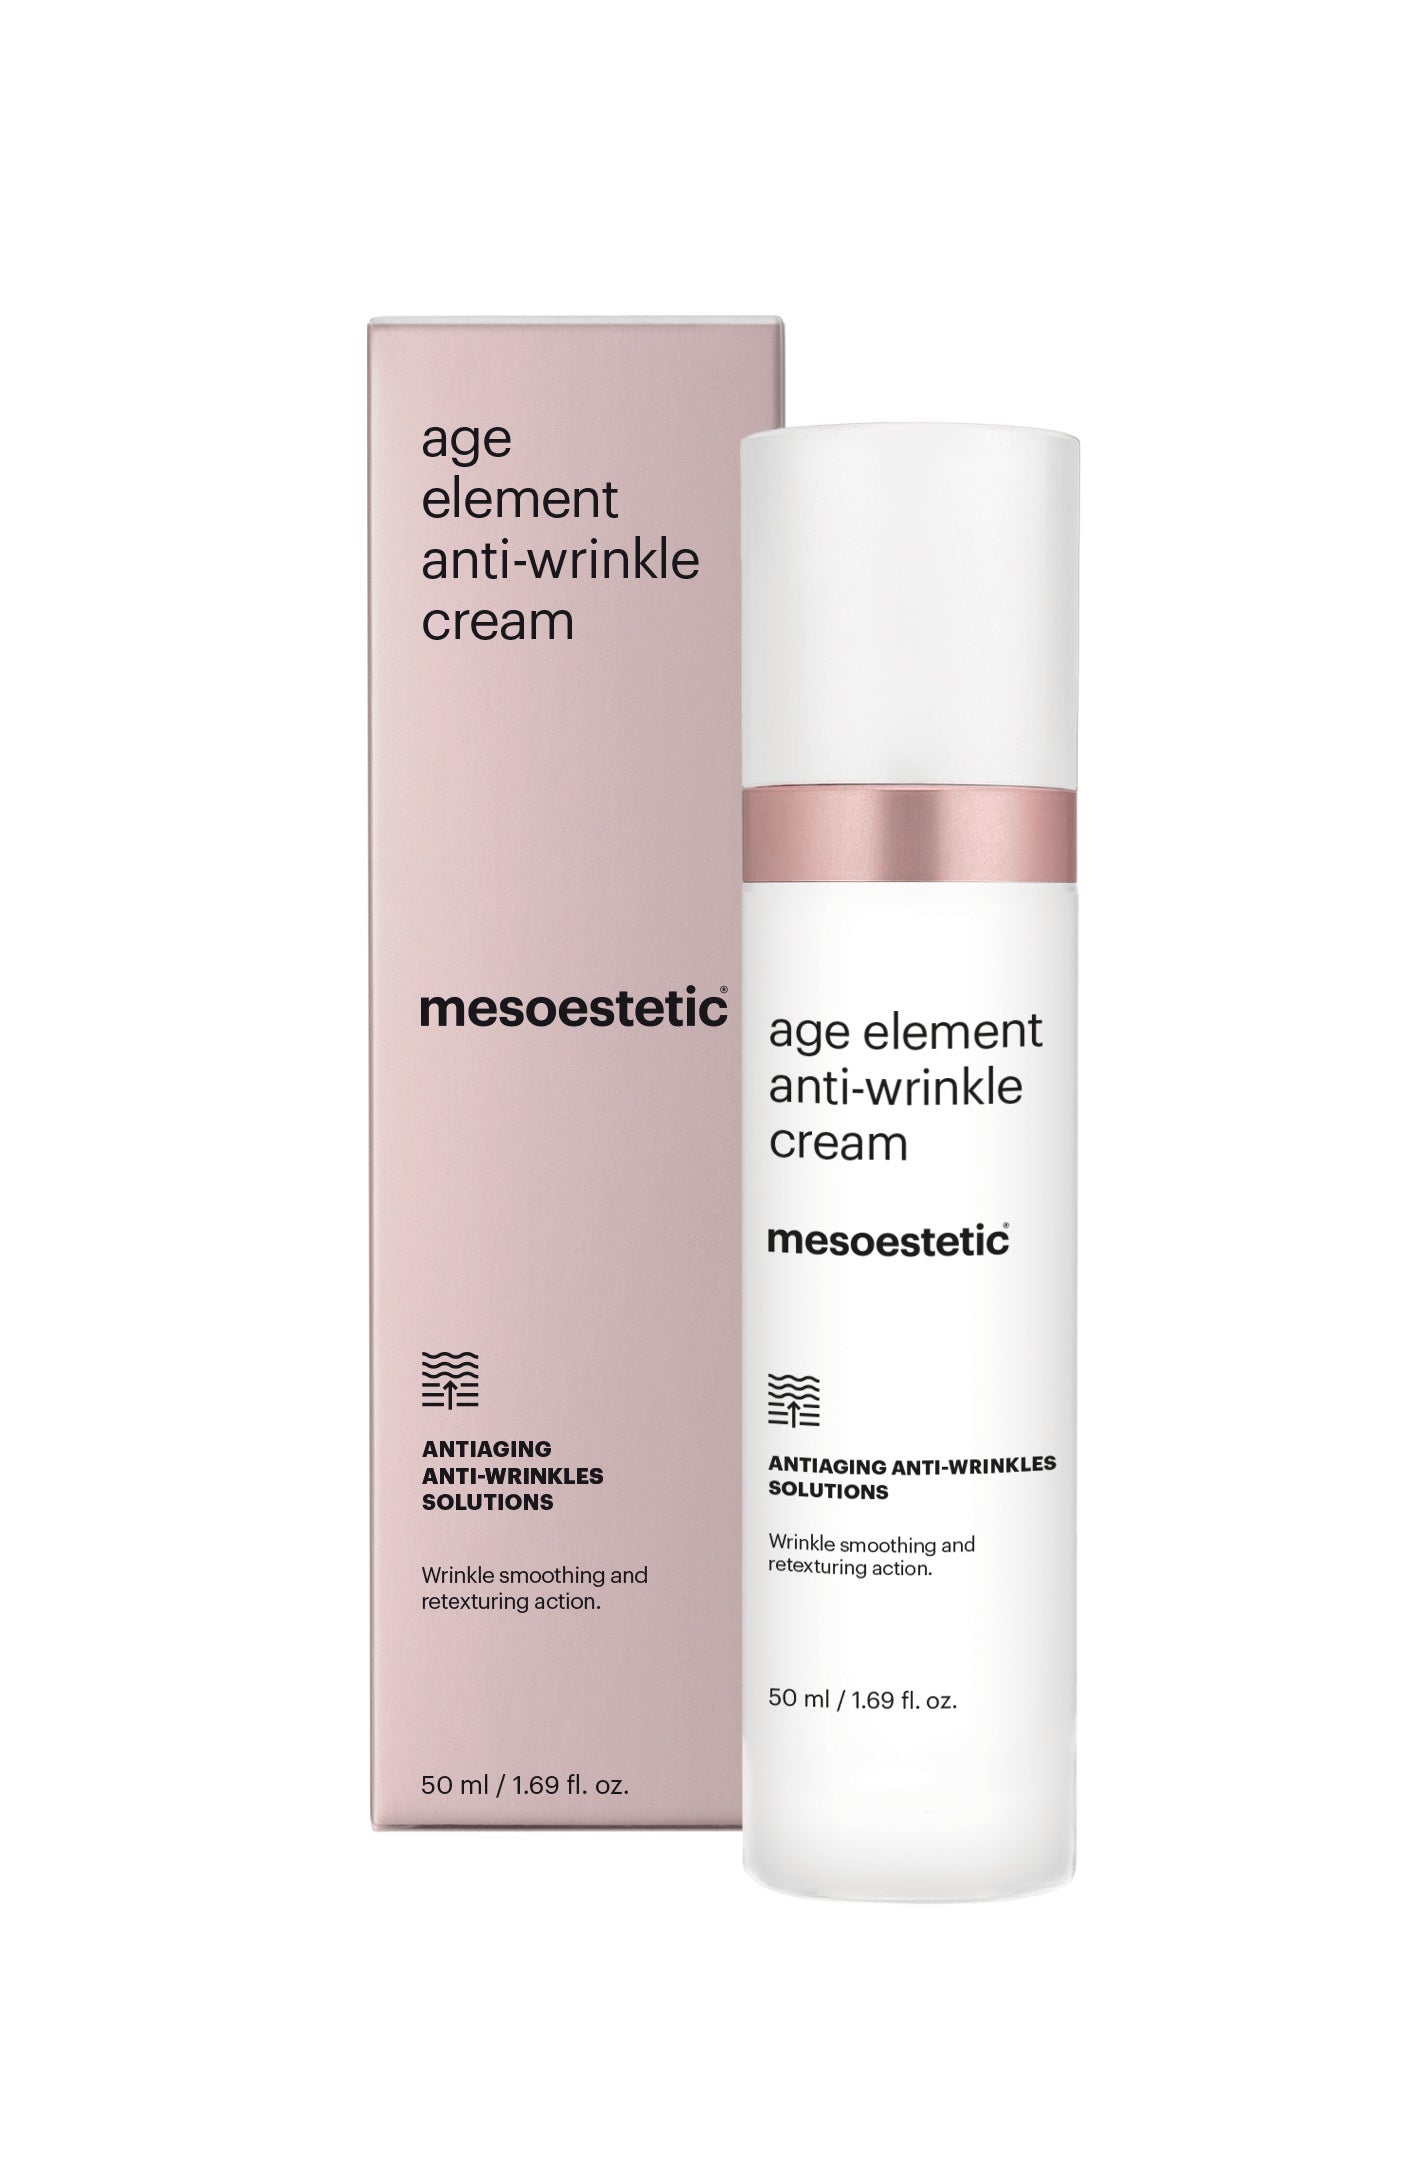 Mesoestetic age element anti-wrinkle cream